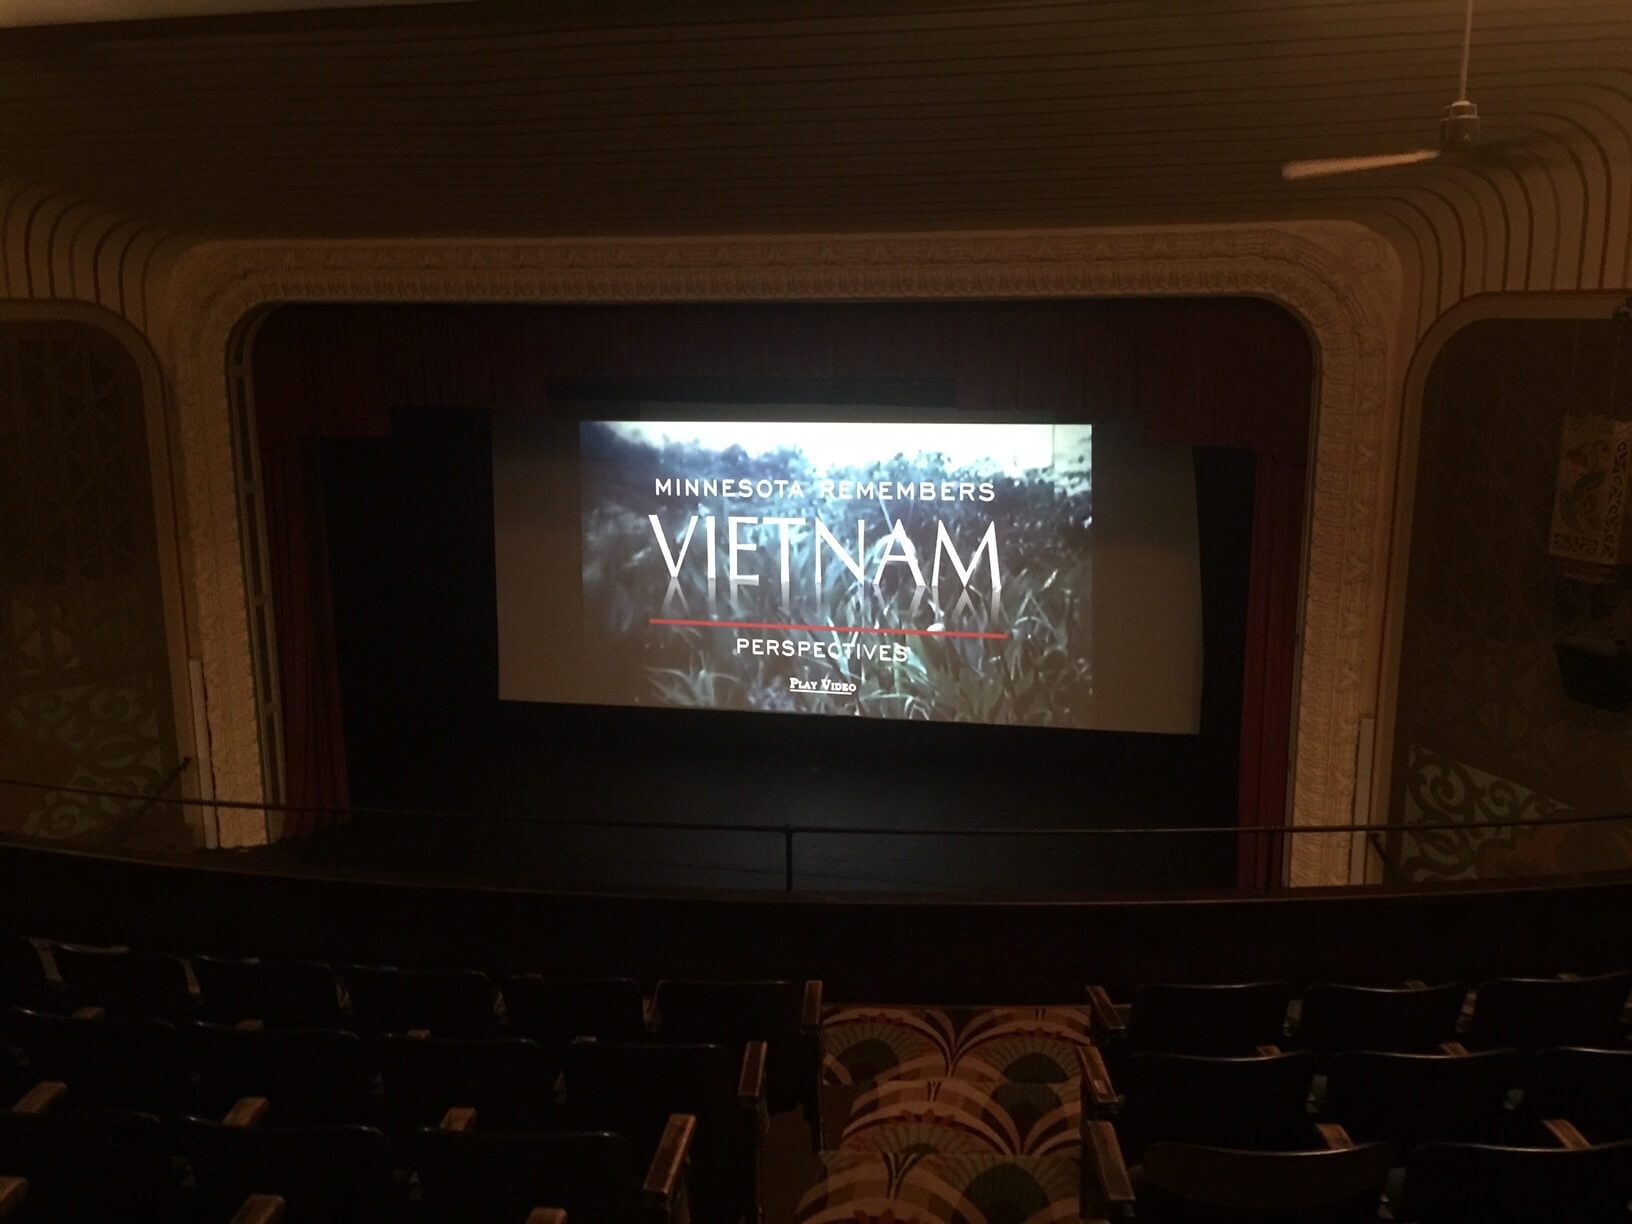 Vietnam War film playing on a screen in a dark theater